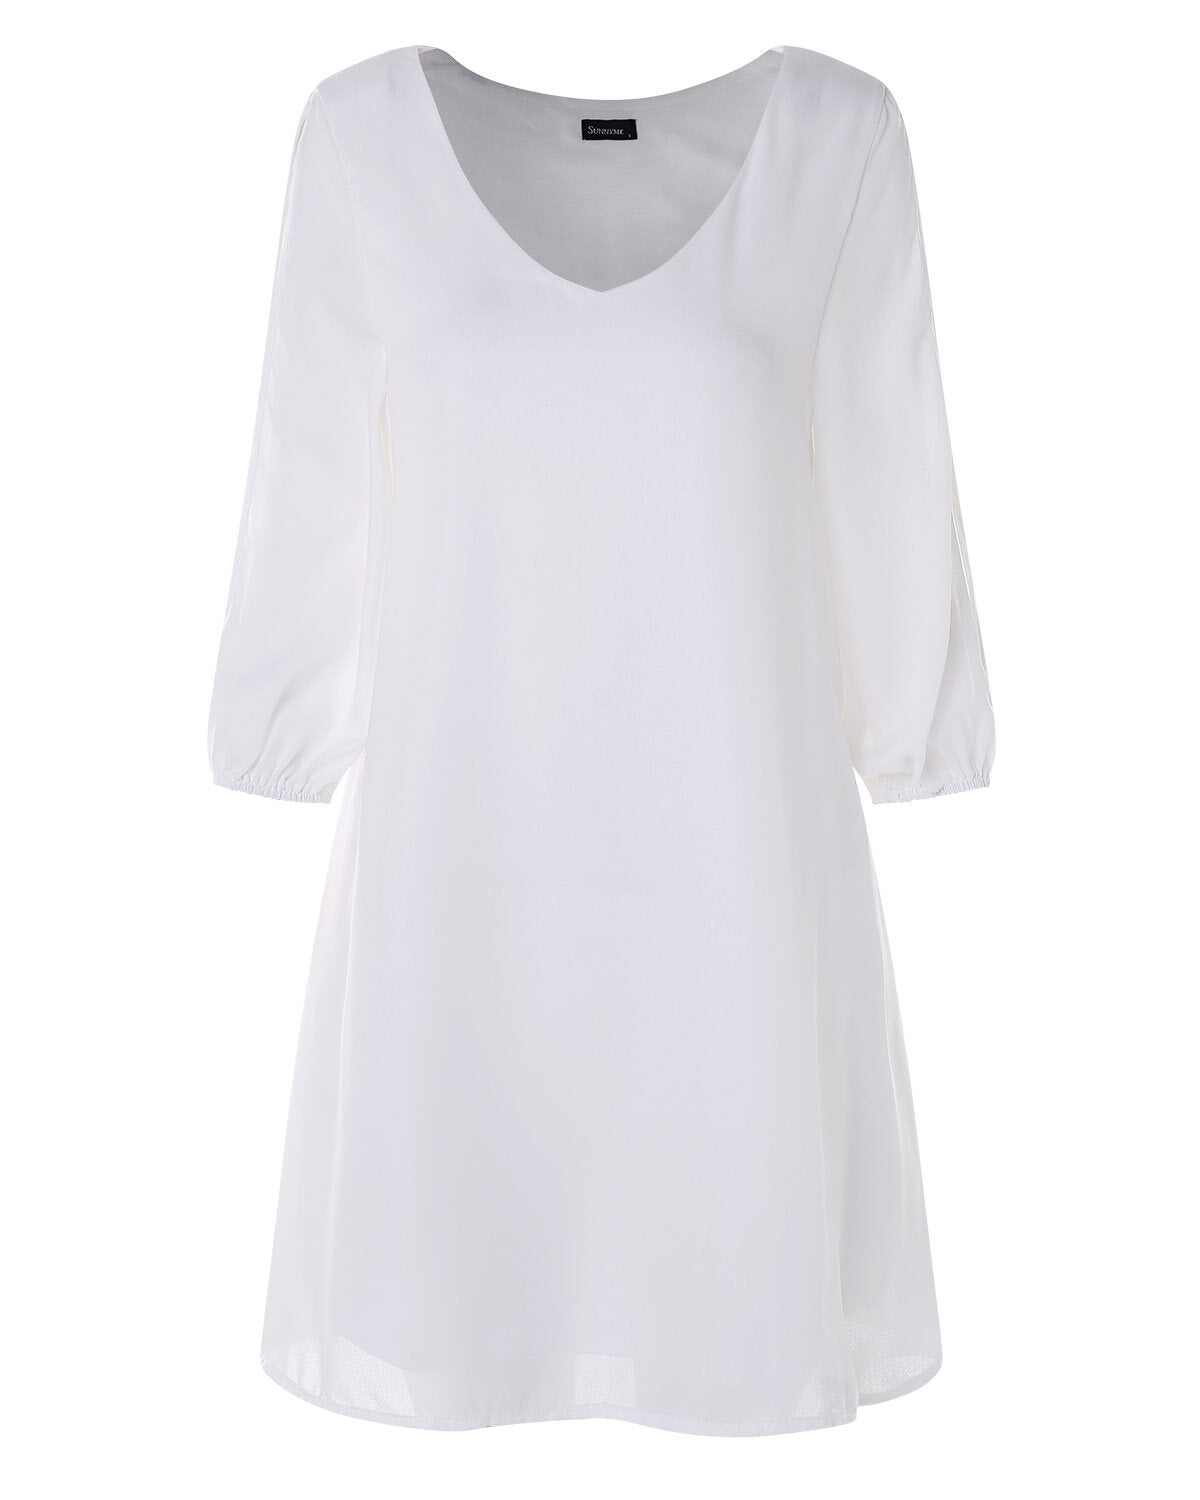 Women Summer Solid Casual 3/4 Sleeve Shirt Mini Dress